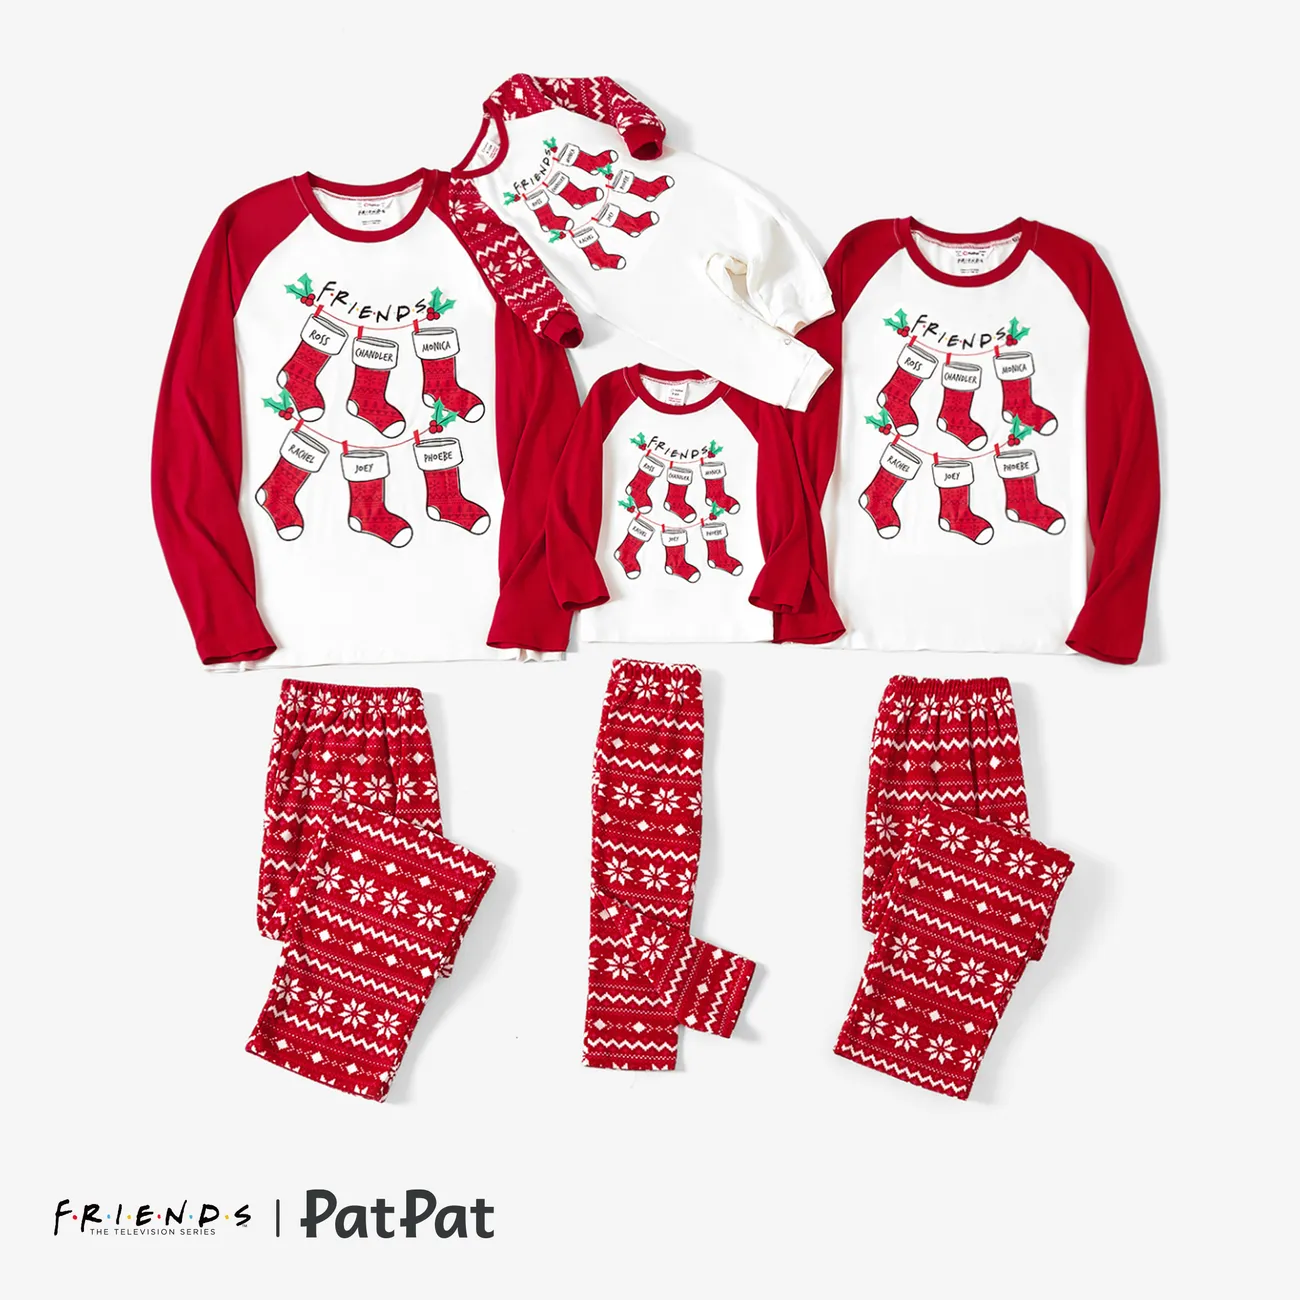 Friends Familien-Looks Langärmelig Familien-Outfits Pyjamas (Flame Resistant) rot big image 1